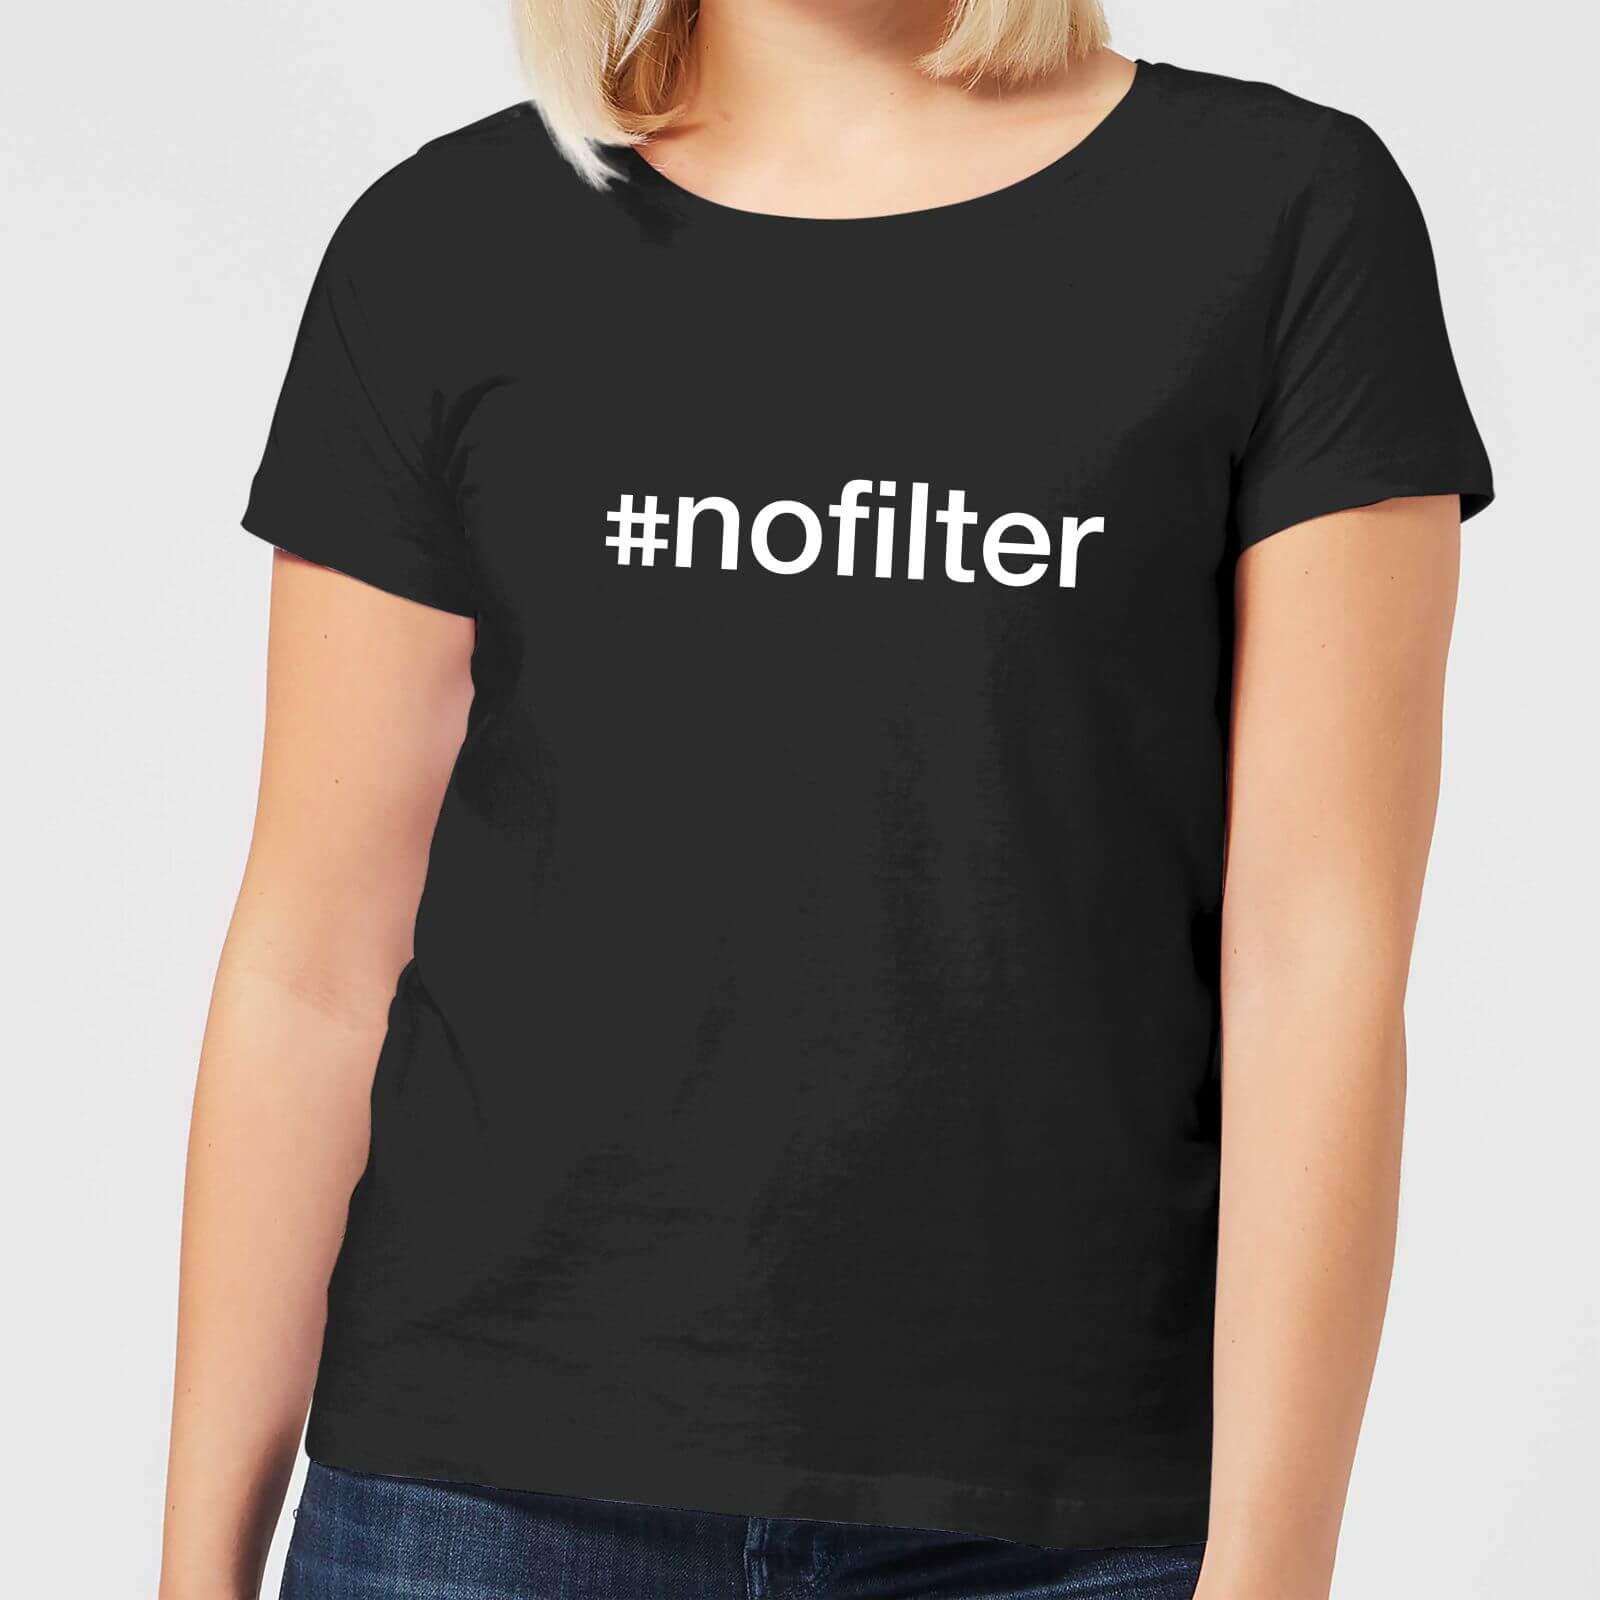 nofilter Women's T-Shirt - Black - 3XL - Black